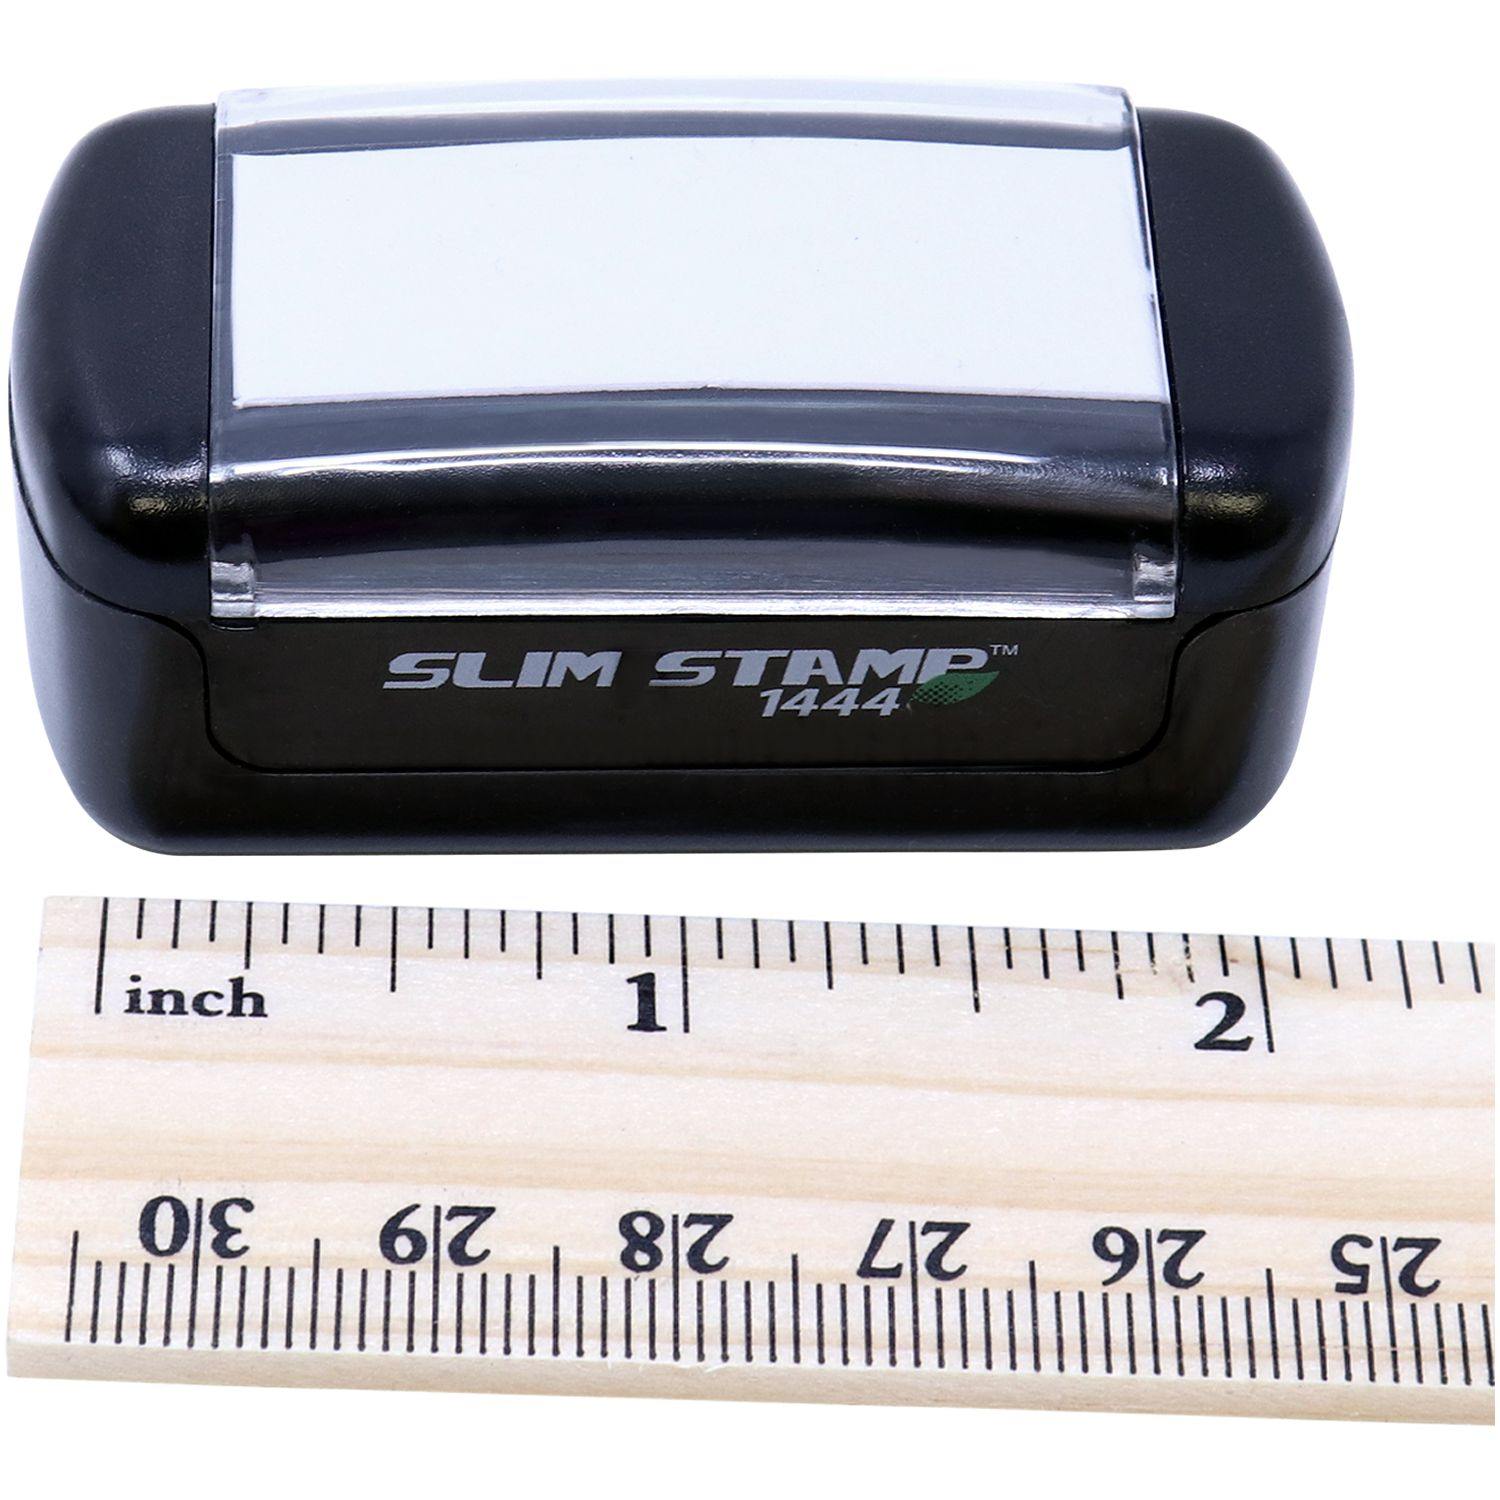 Measurement Slim Pre Inked Good Work Stamp with Ruler